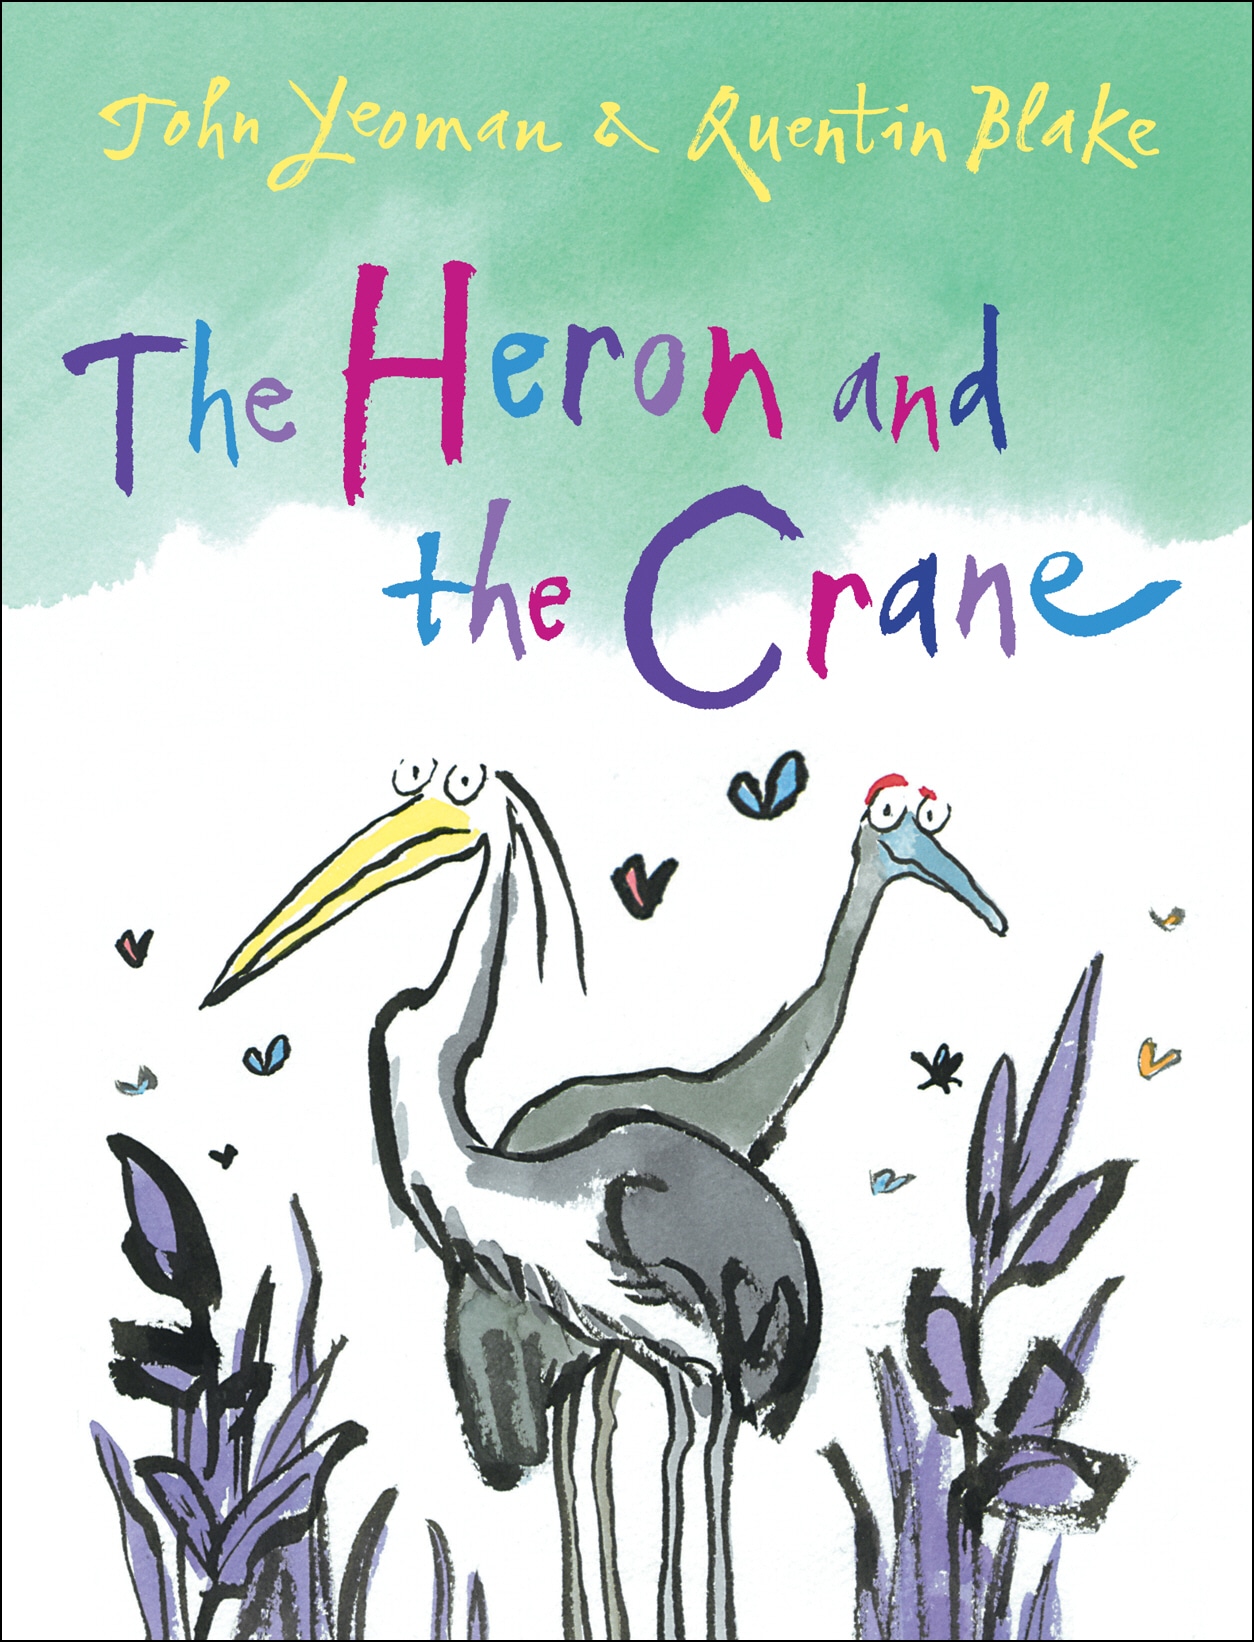 The Heron and the Crane